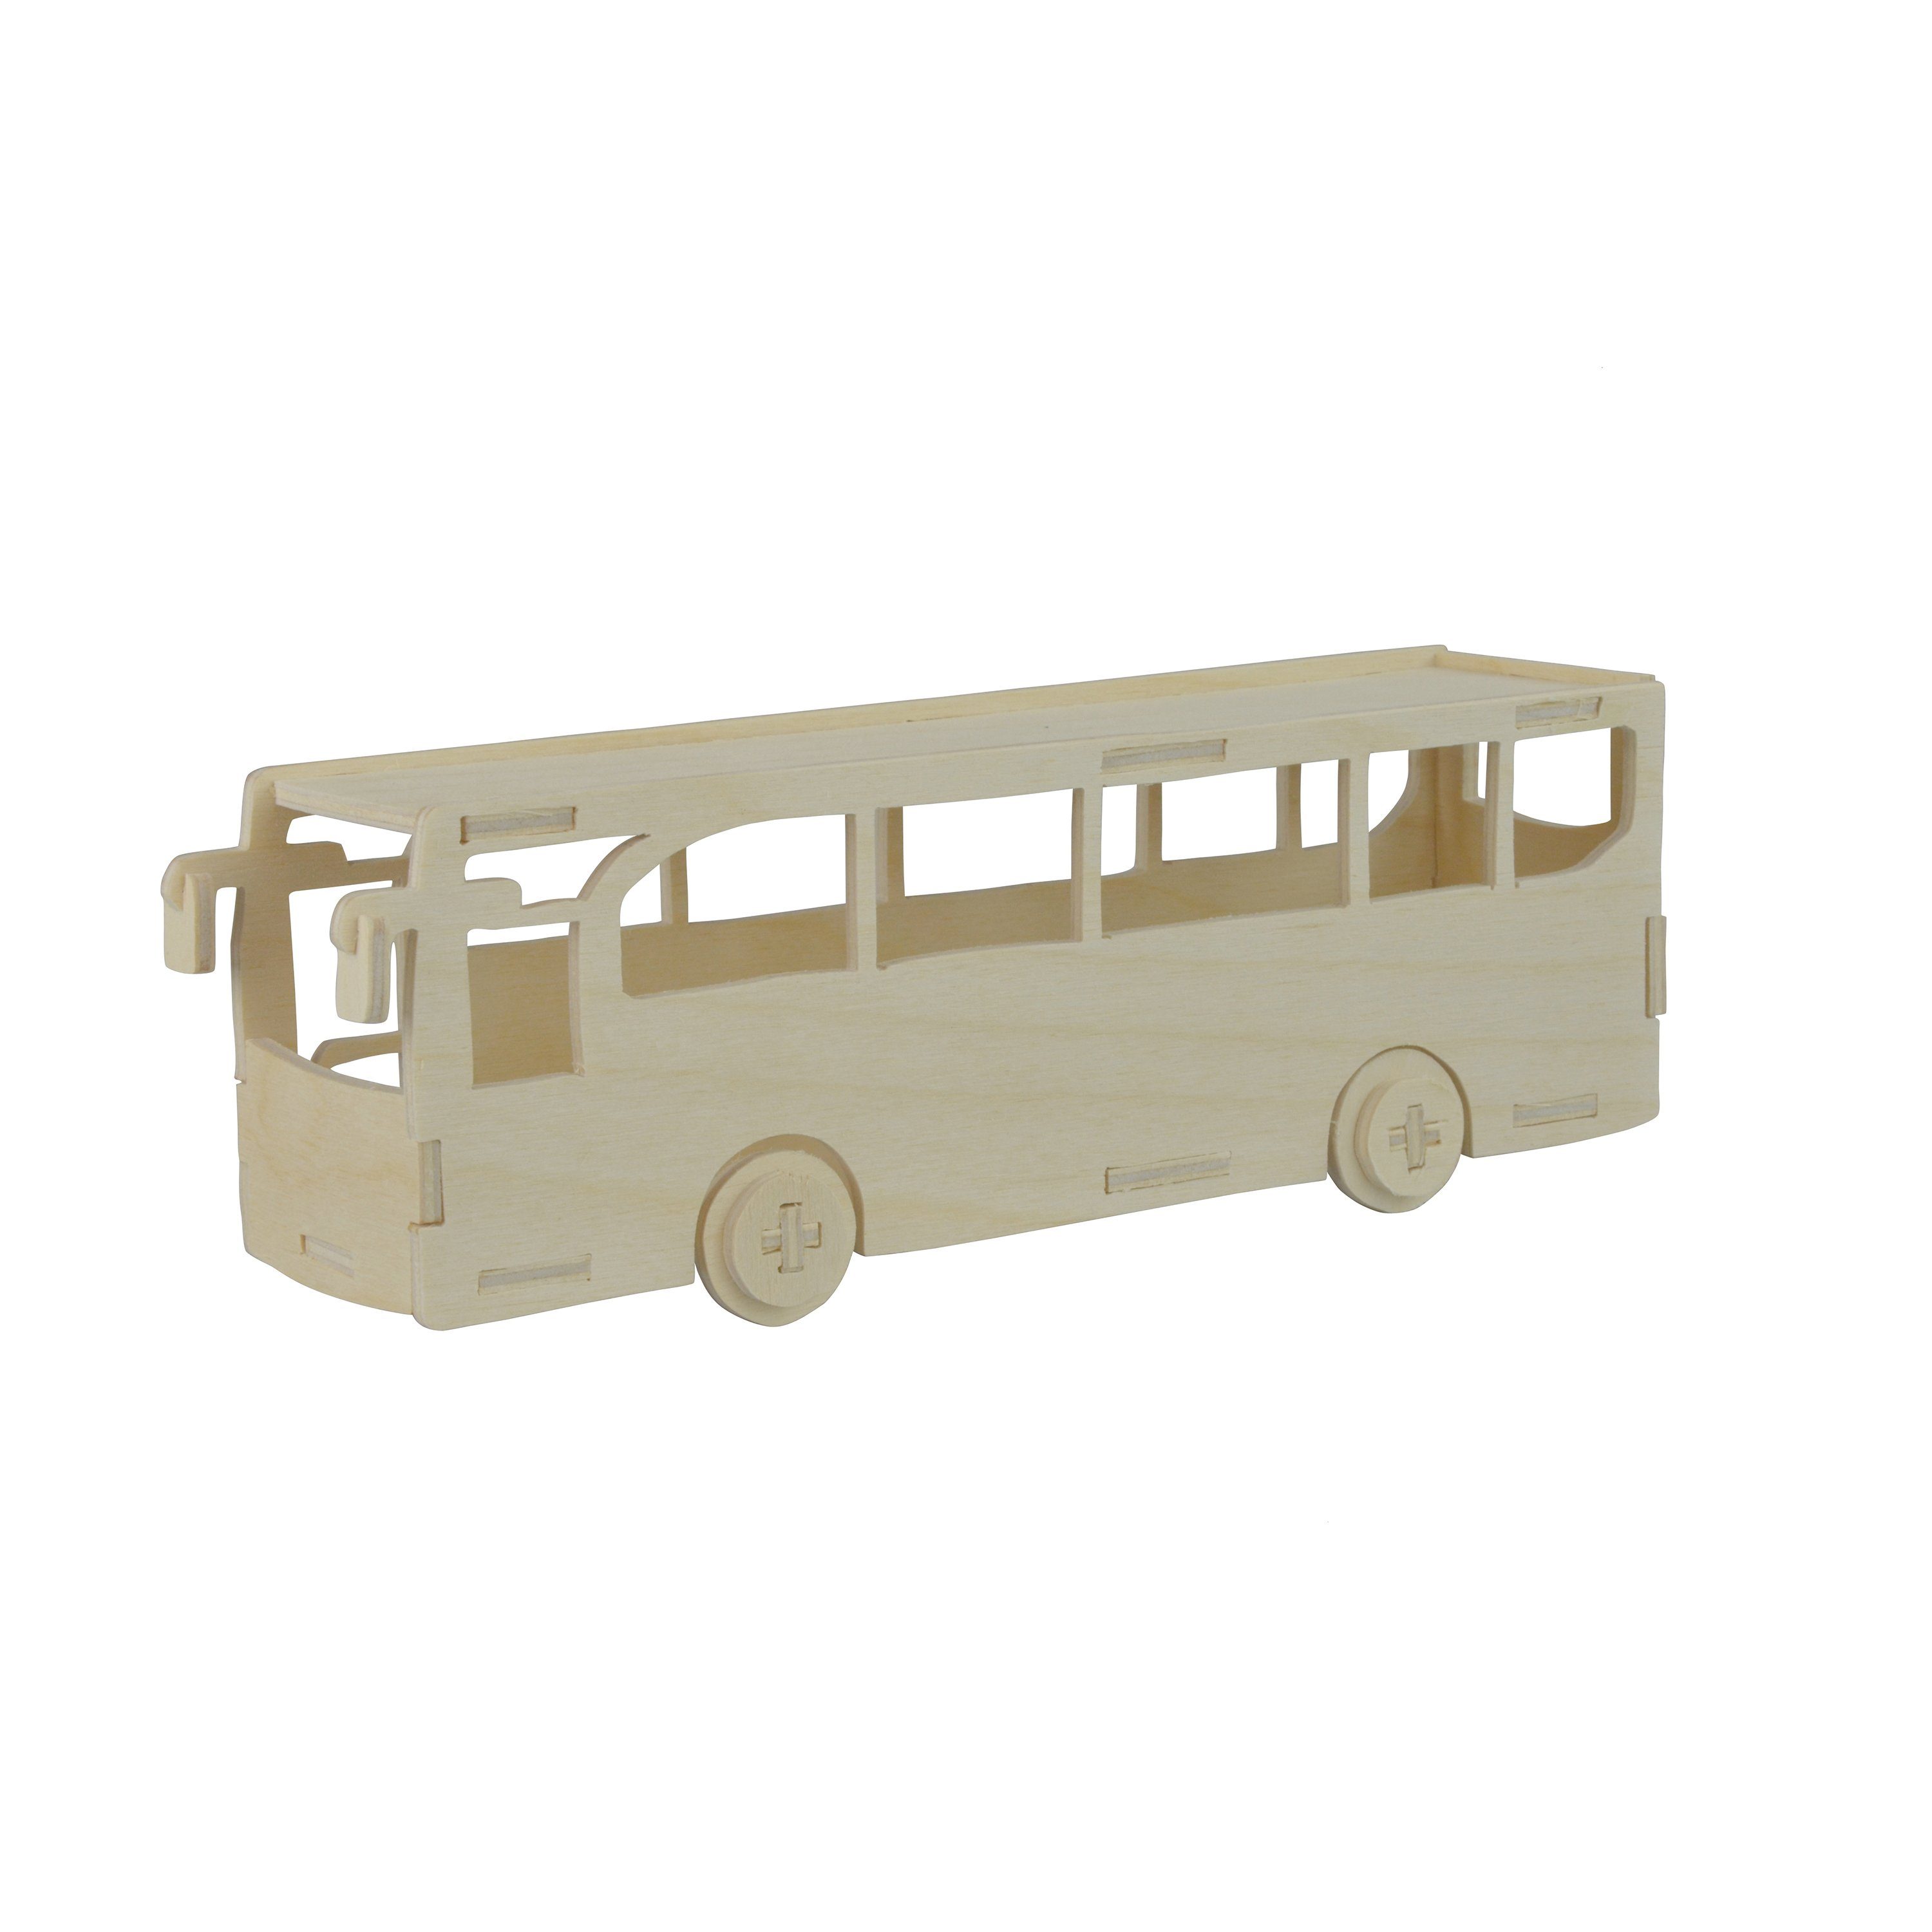 20 Bus, Pebaro 3D-Puzzle 851/6, Puzzleteile Holzbausatz